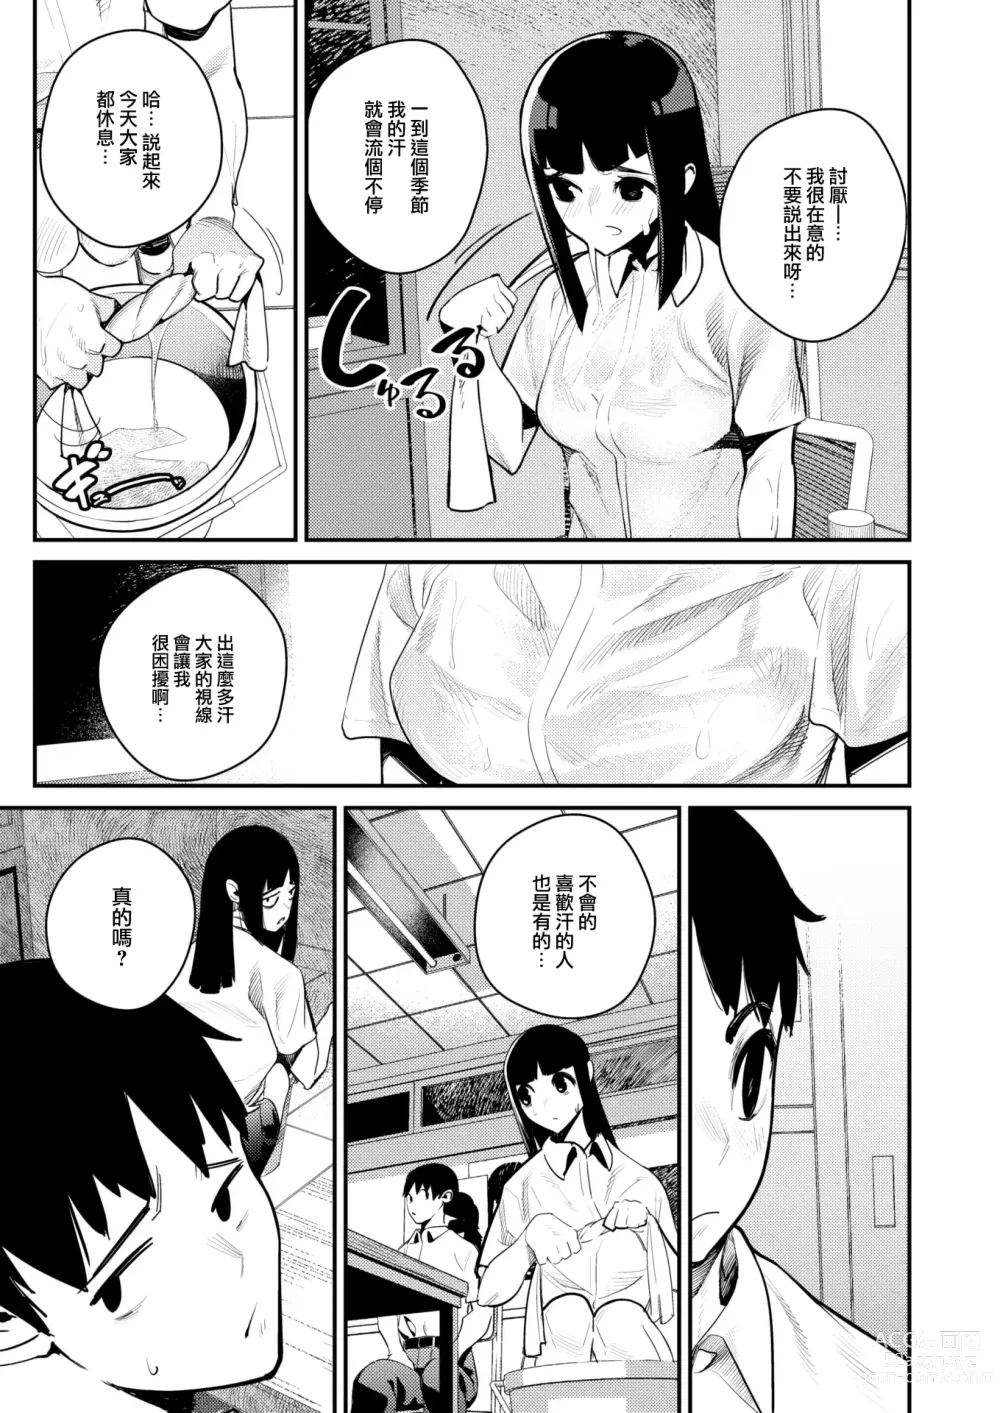 Page 4 of manga Kaijin Netsuai Mokushiroku